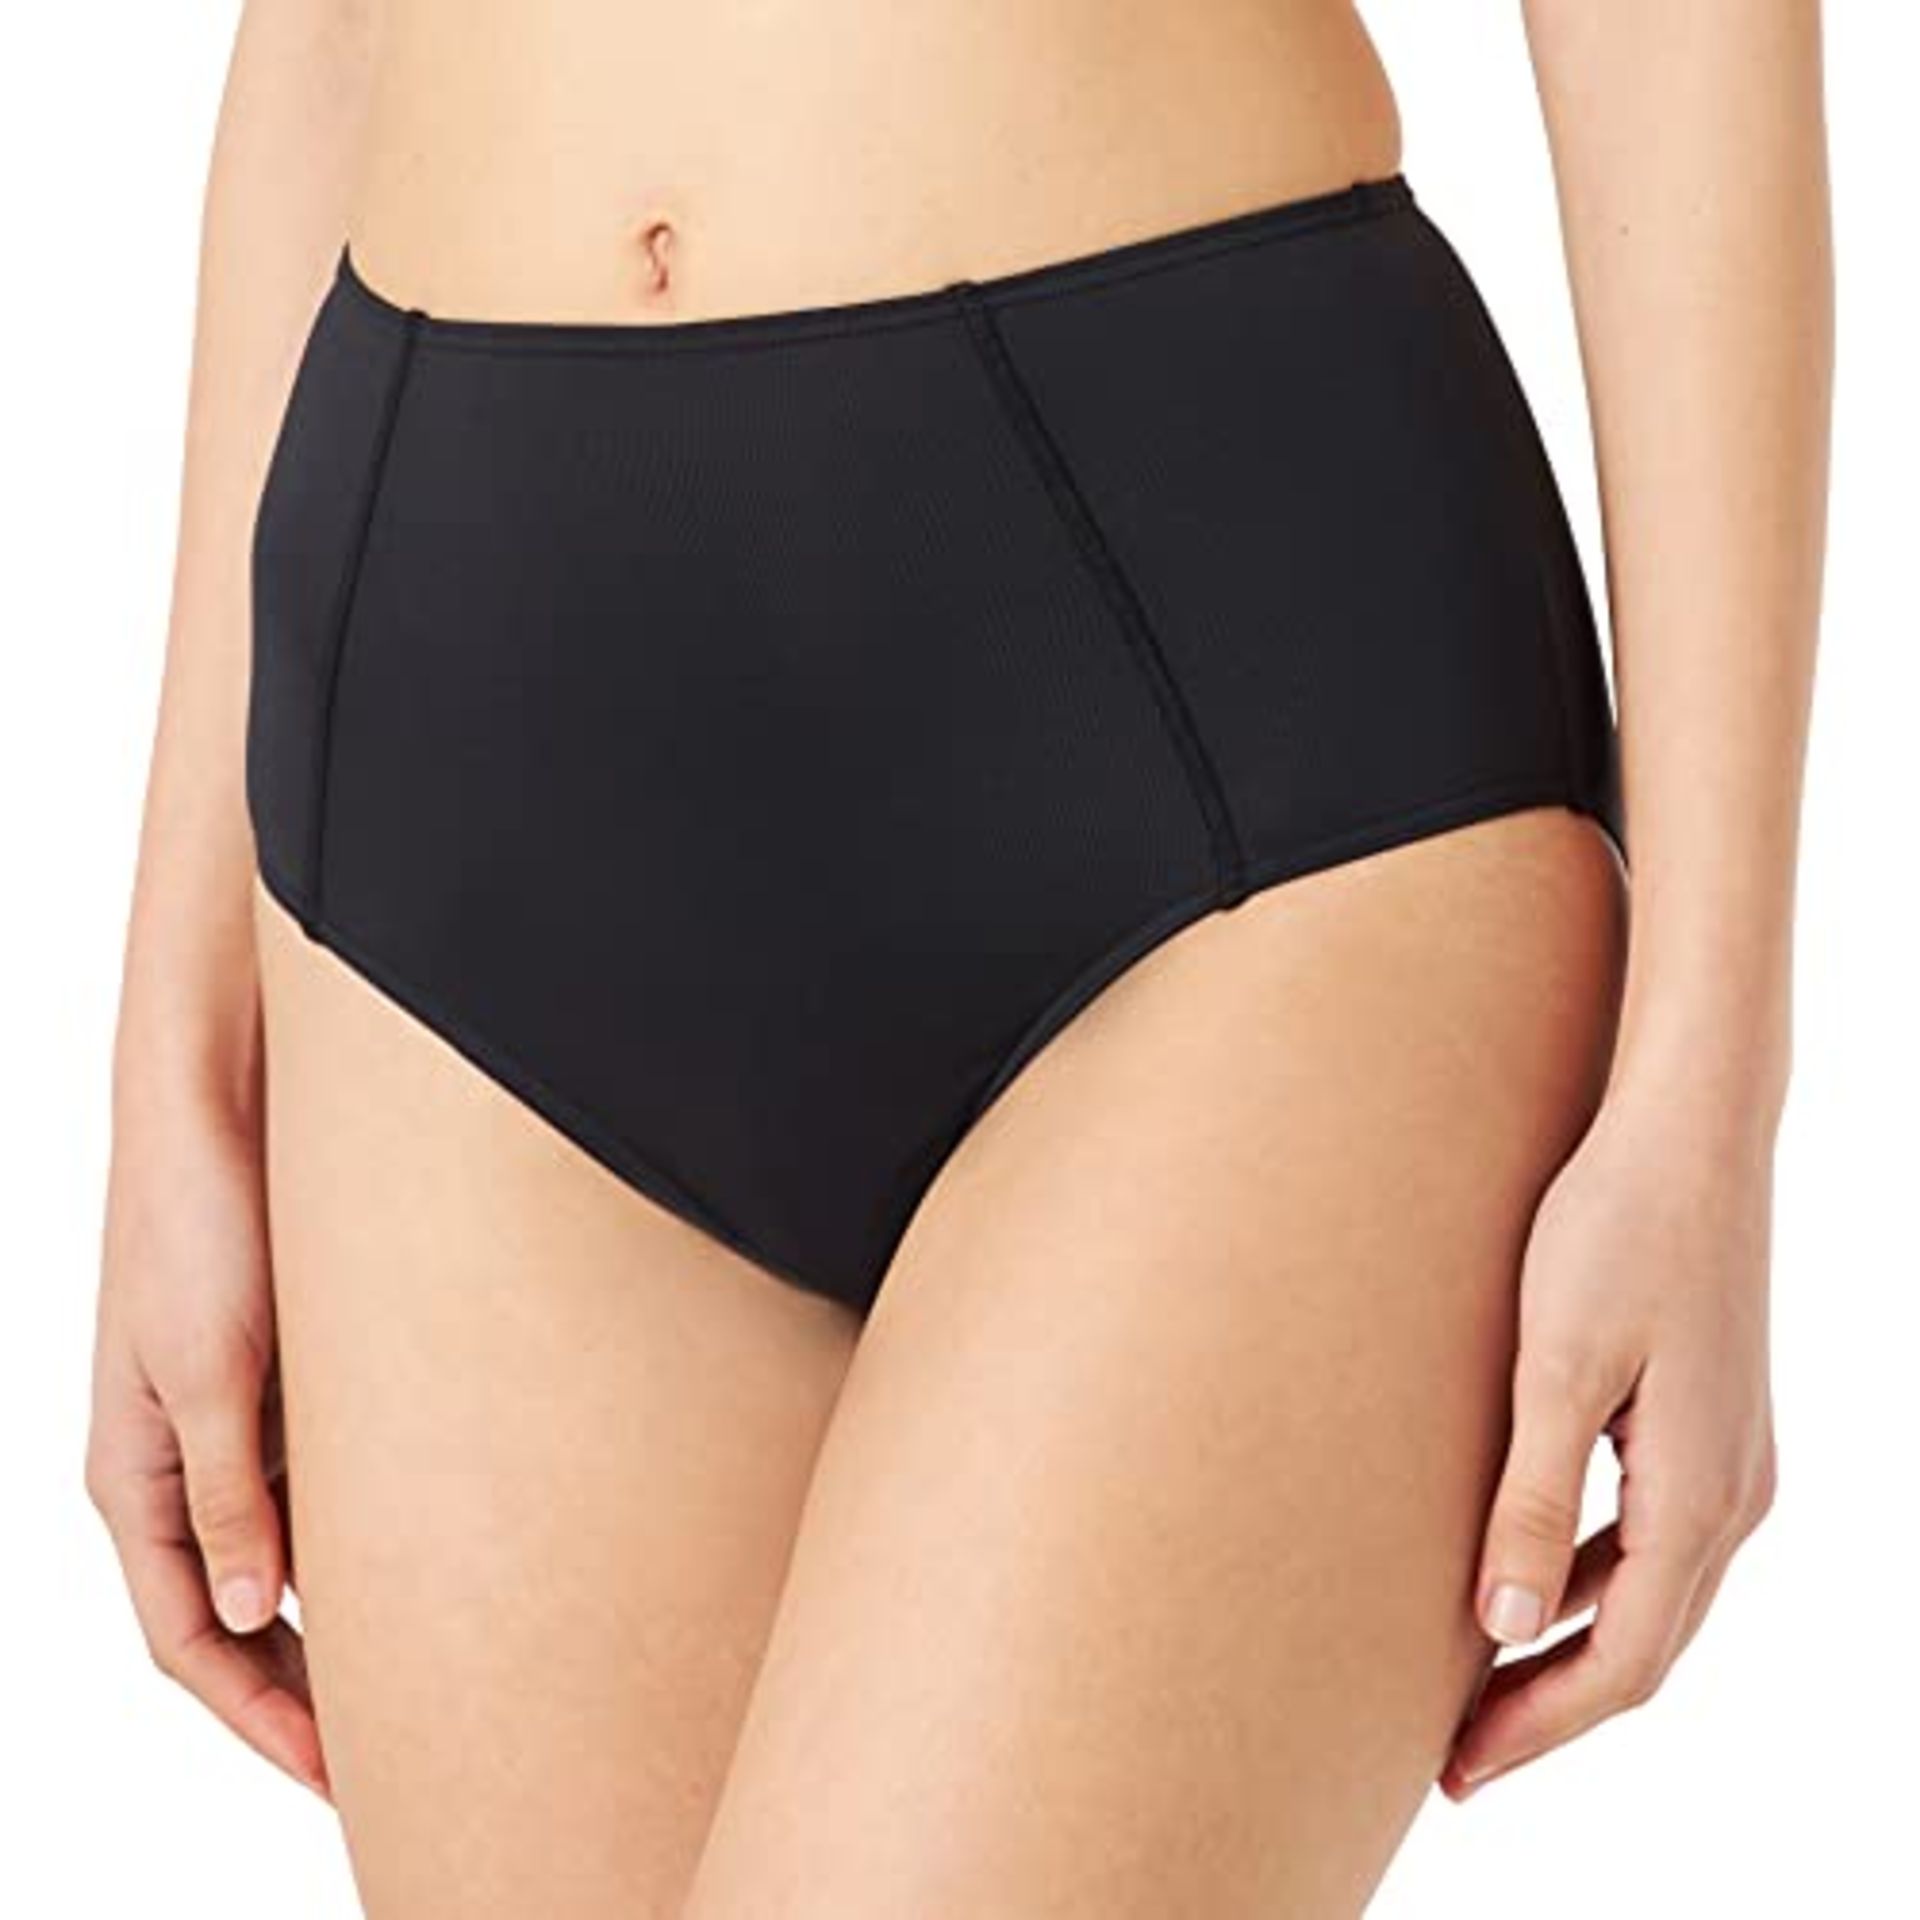 ESPRIT Bodywear Women's TURA Beach AY RCS highw.Brief Bikini Bottoms, Black, 42